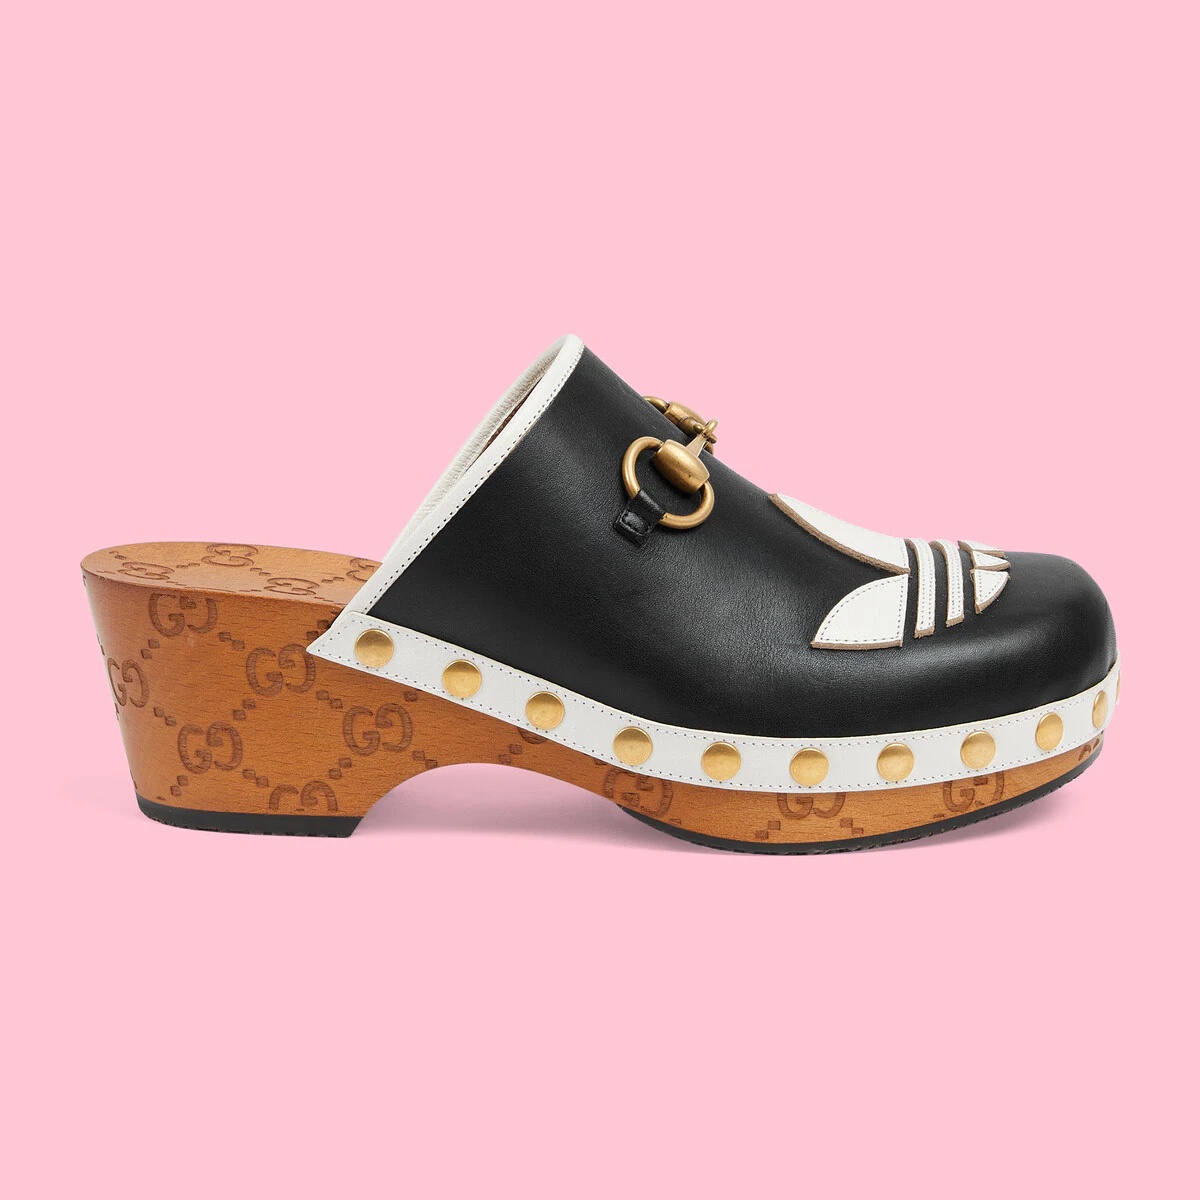 adidas x Gucci women's leather clog - 1